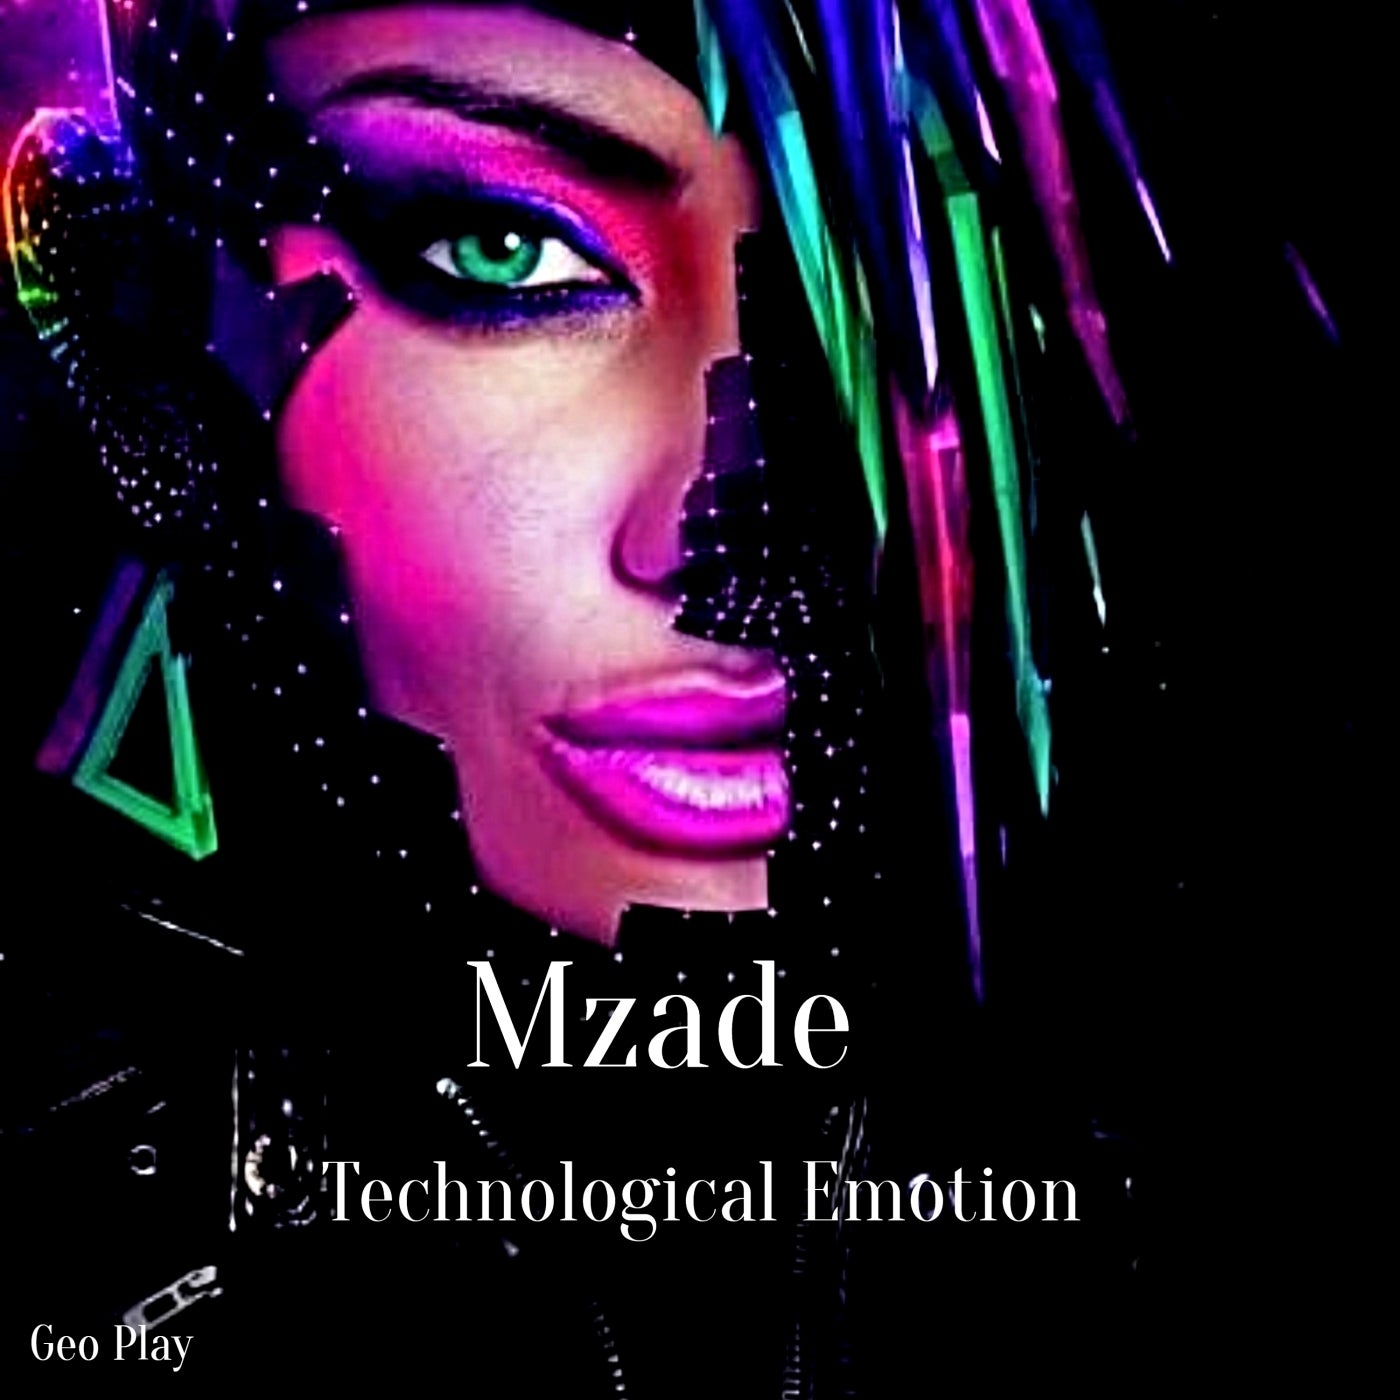 Mzade – Technological Emotion [TEEN228]